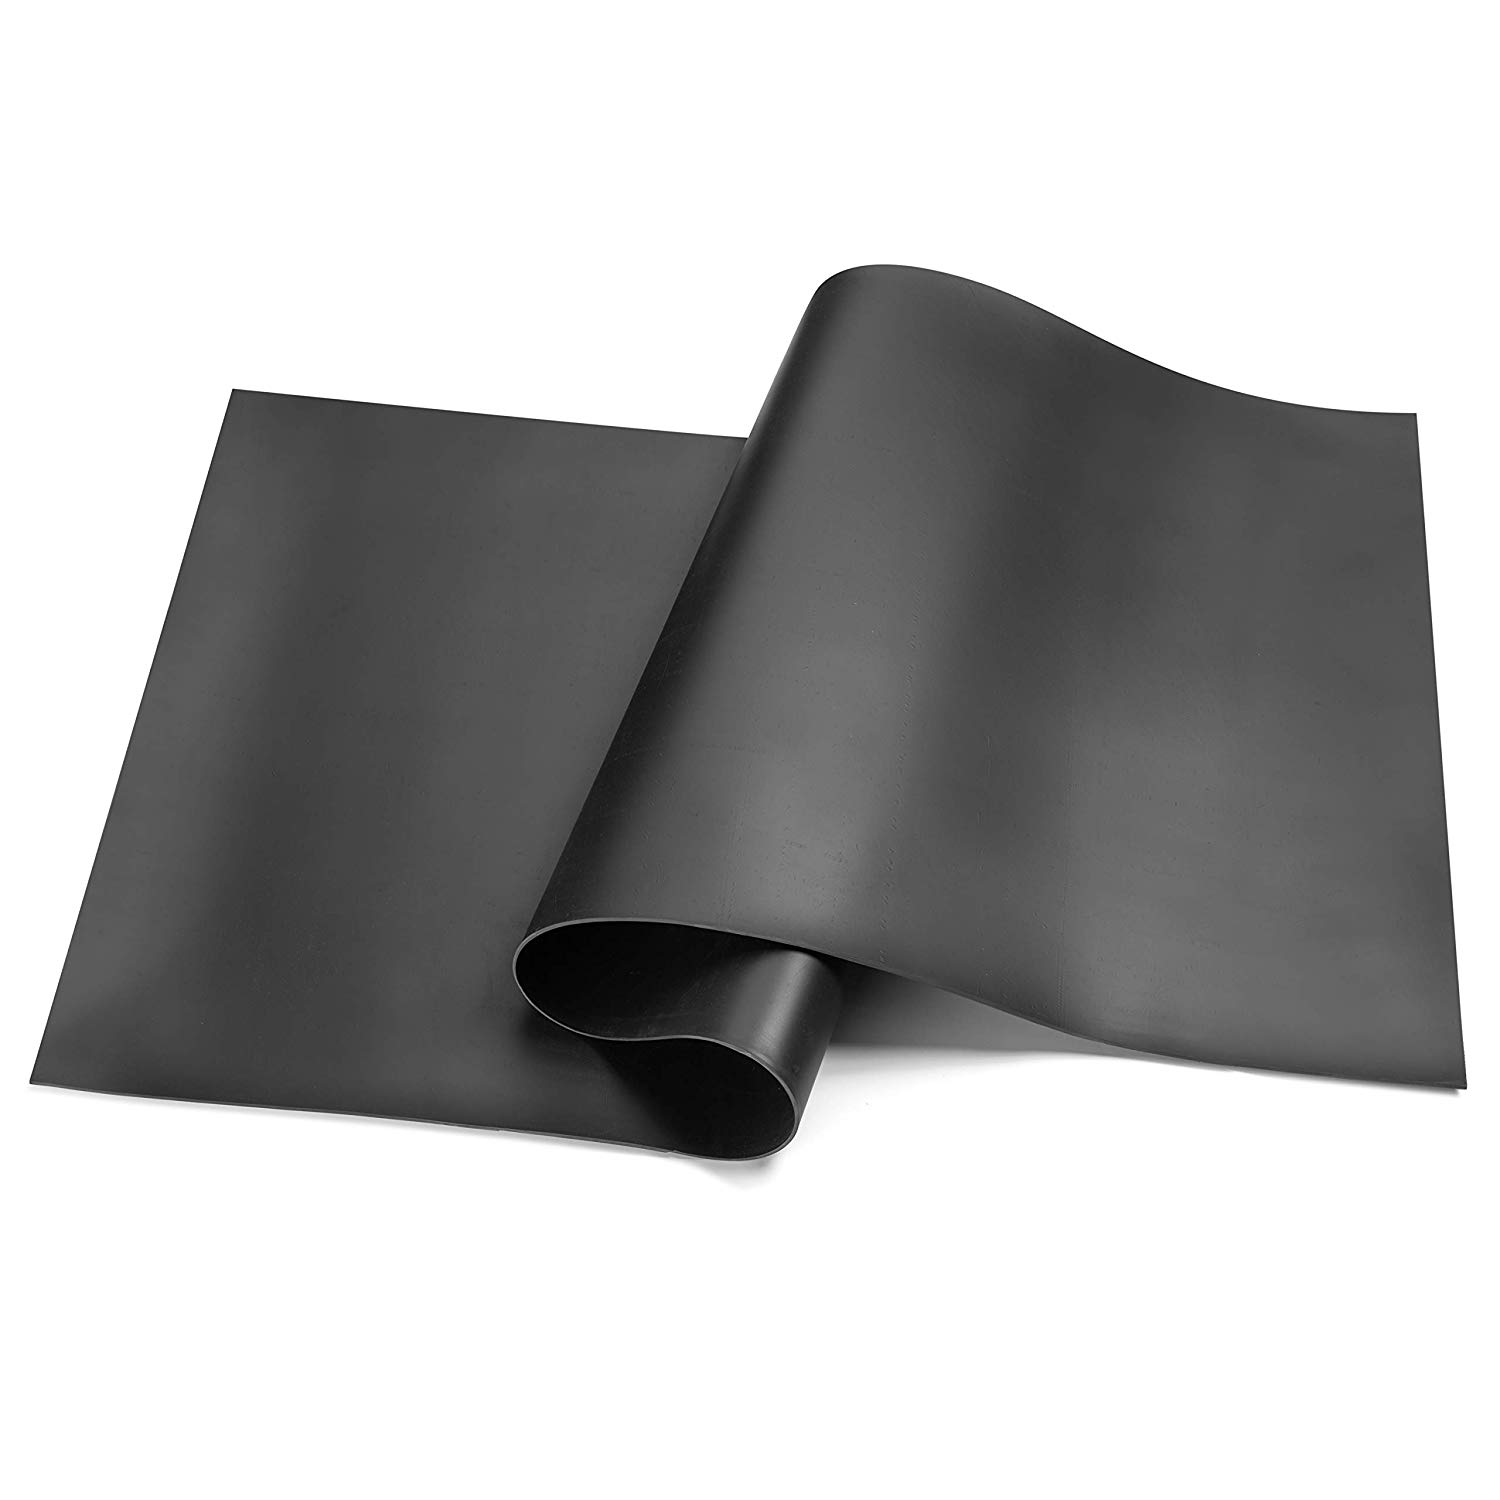 SoundBlanket® Mass Loaded Vinyl nashville, Soundproofing MLV manufacturer  nashville, Soundproofing Membrane nashville